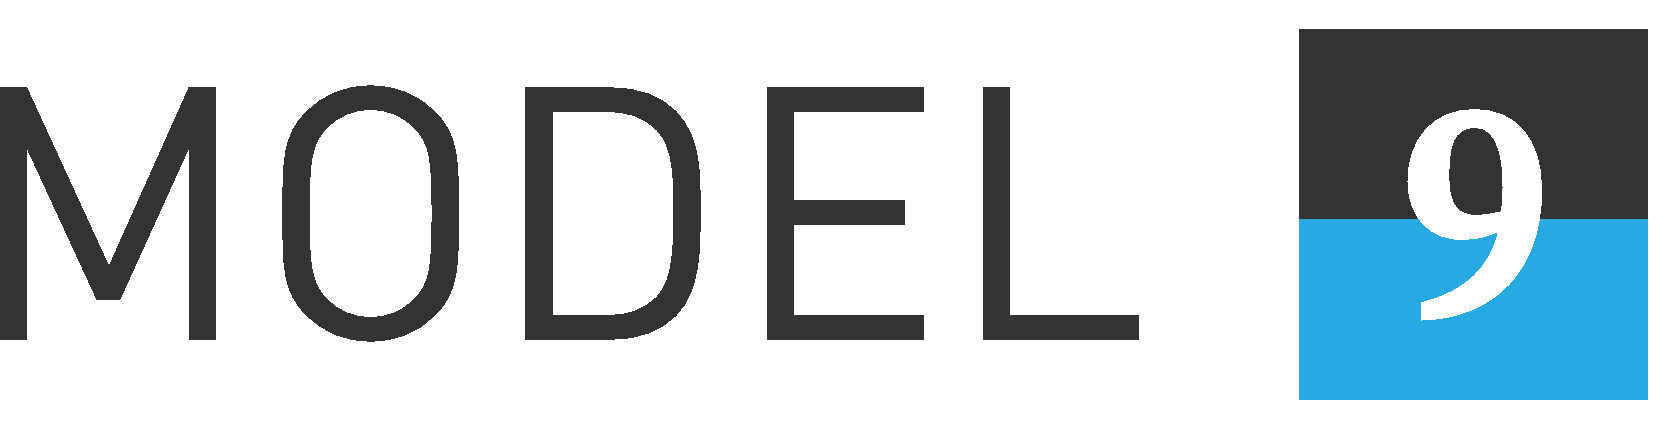 model 9 regular logo 2018